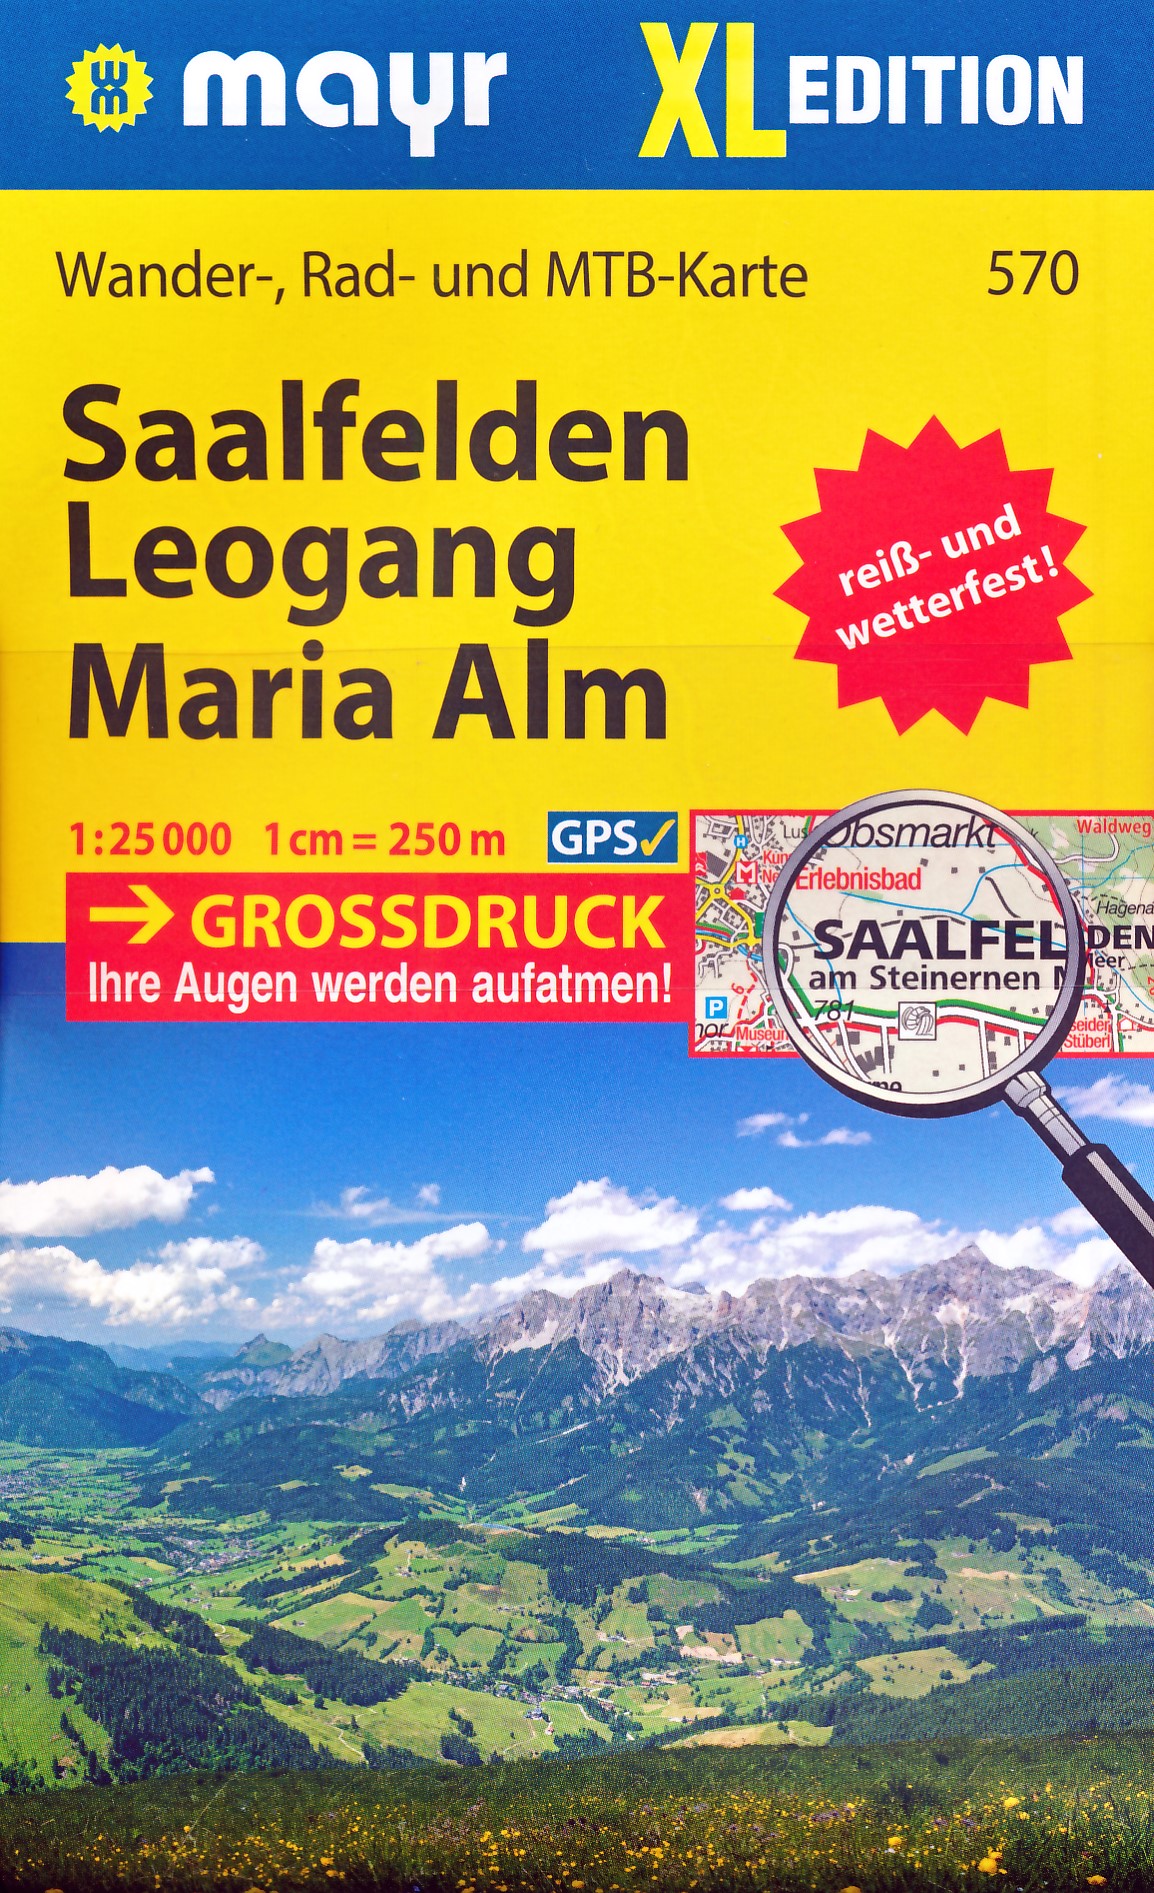 Online bestellen: Wandelkaart 570 XL Saalfelden - Leogang - Maria Alm | Mayr